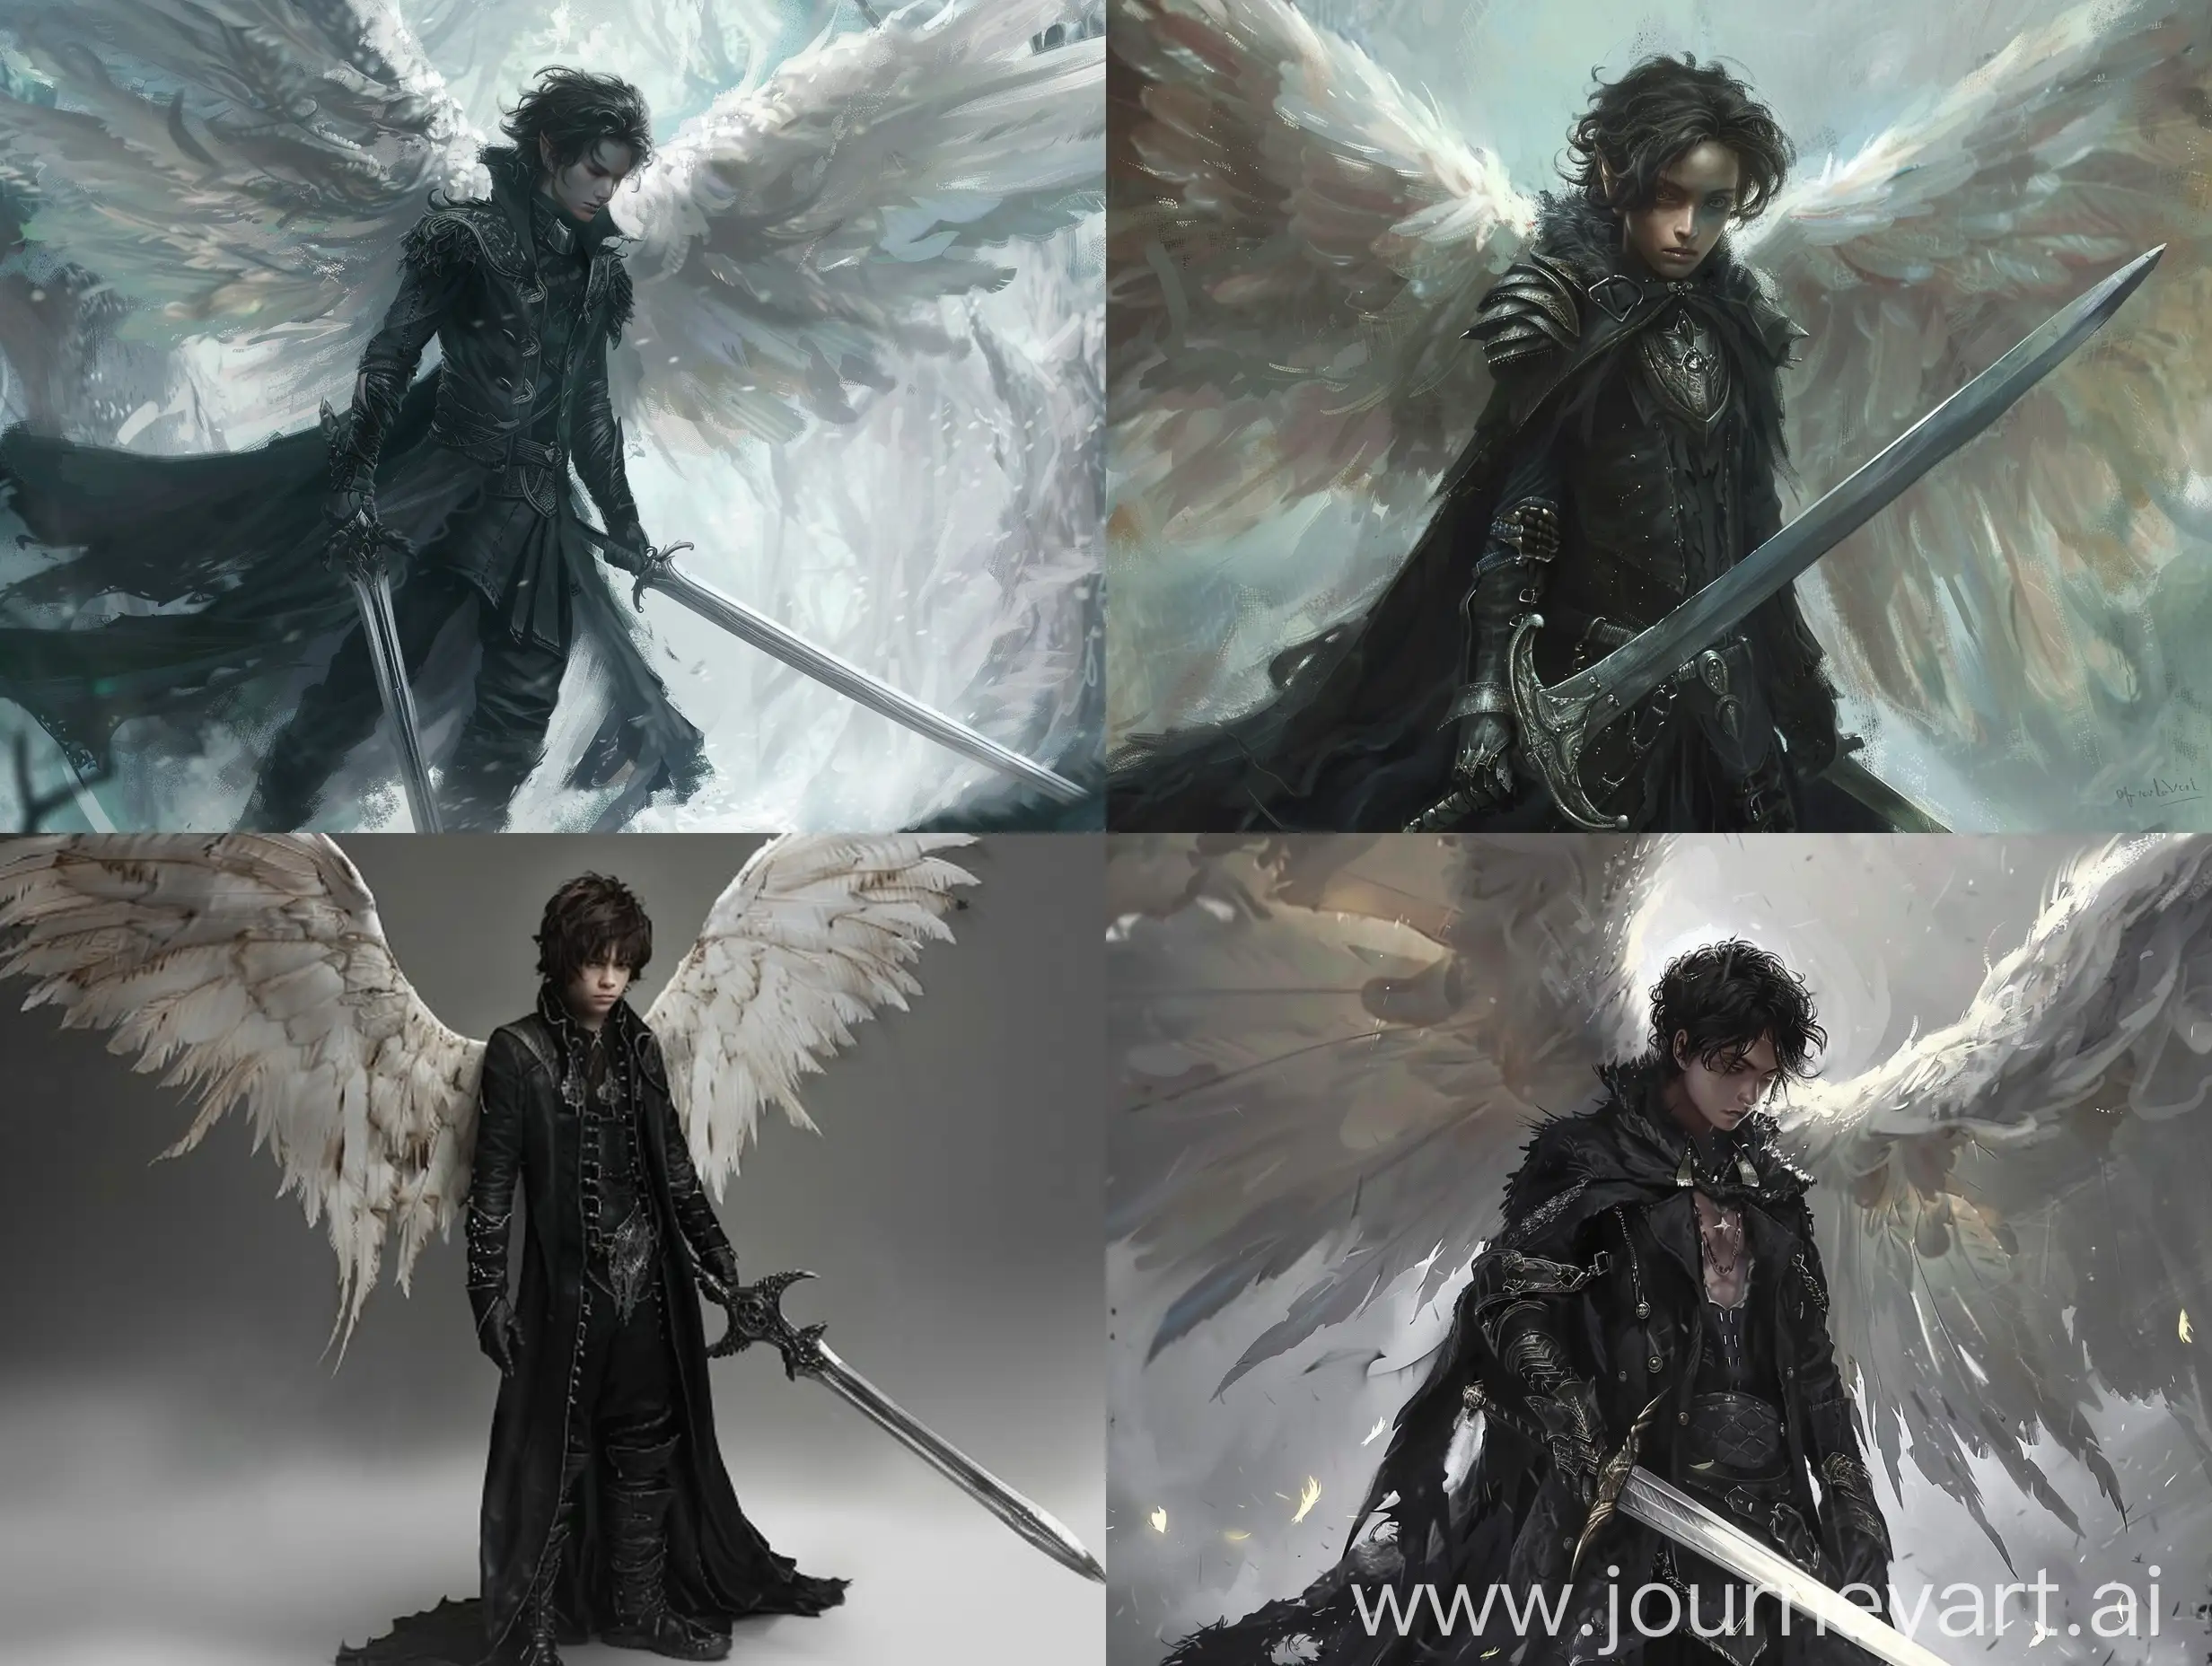 Shiny-WhiteWinged-Fantasy-Warrior-Boy-in-a-Black-Coat